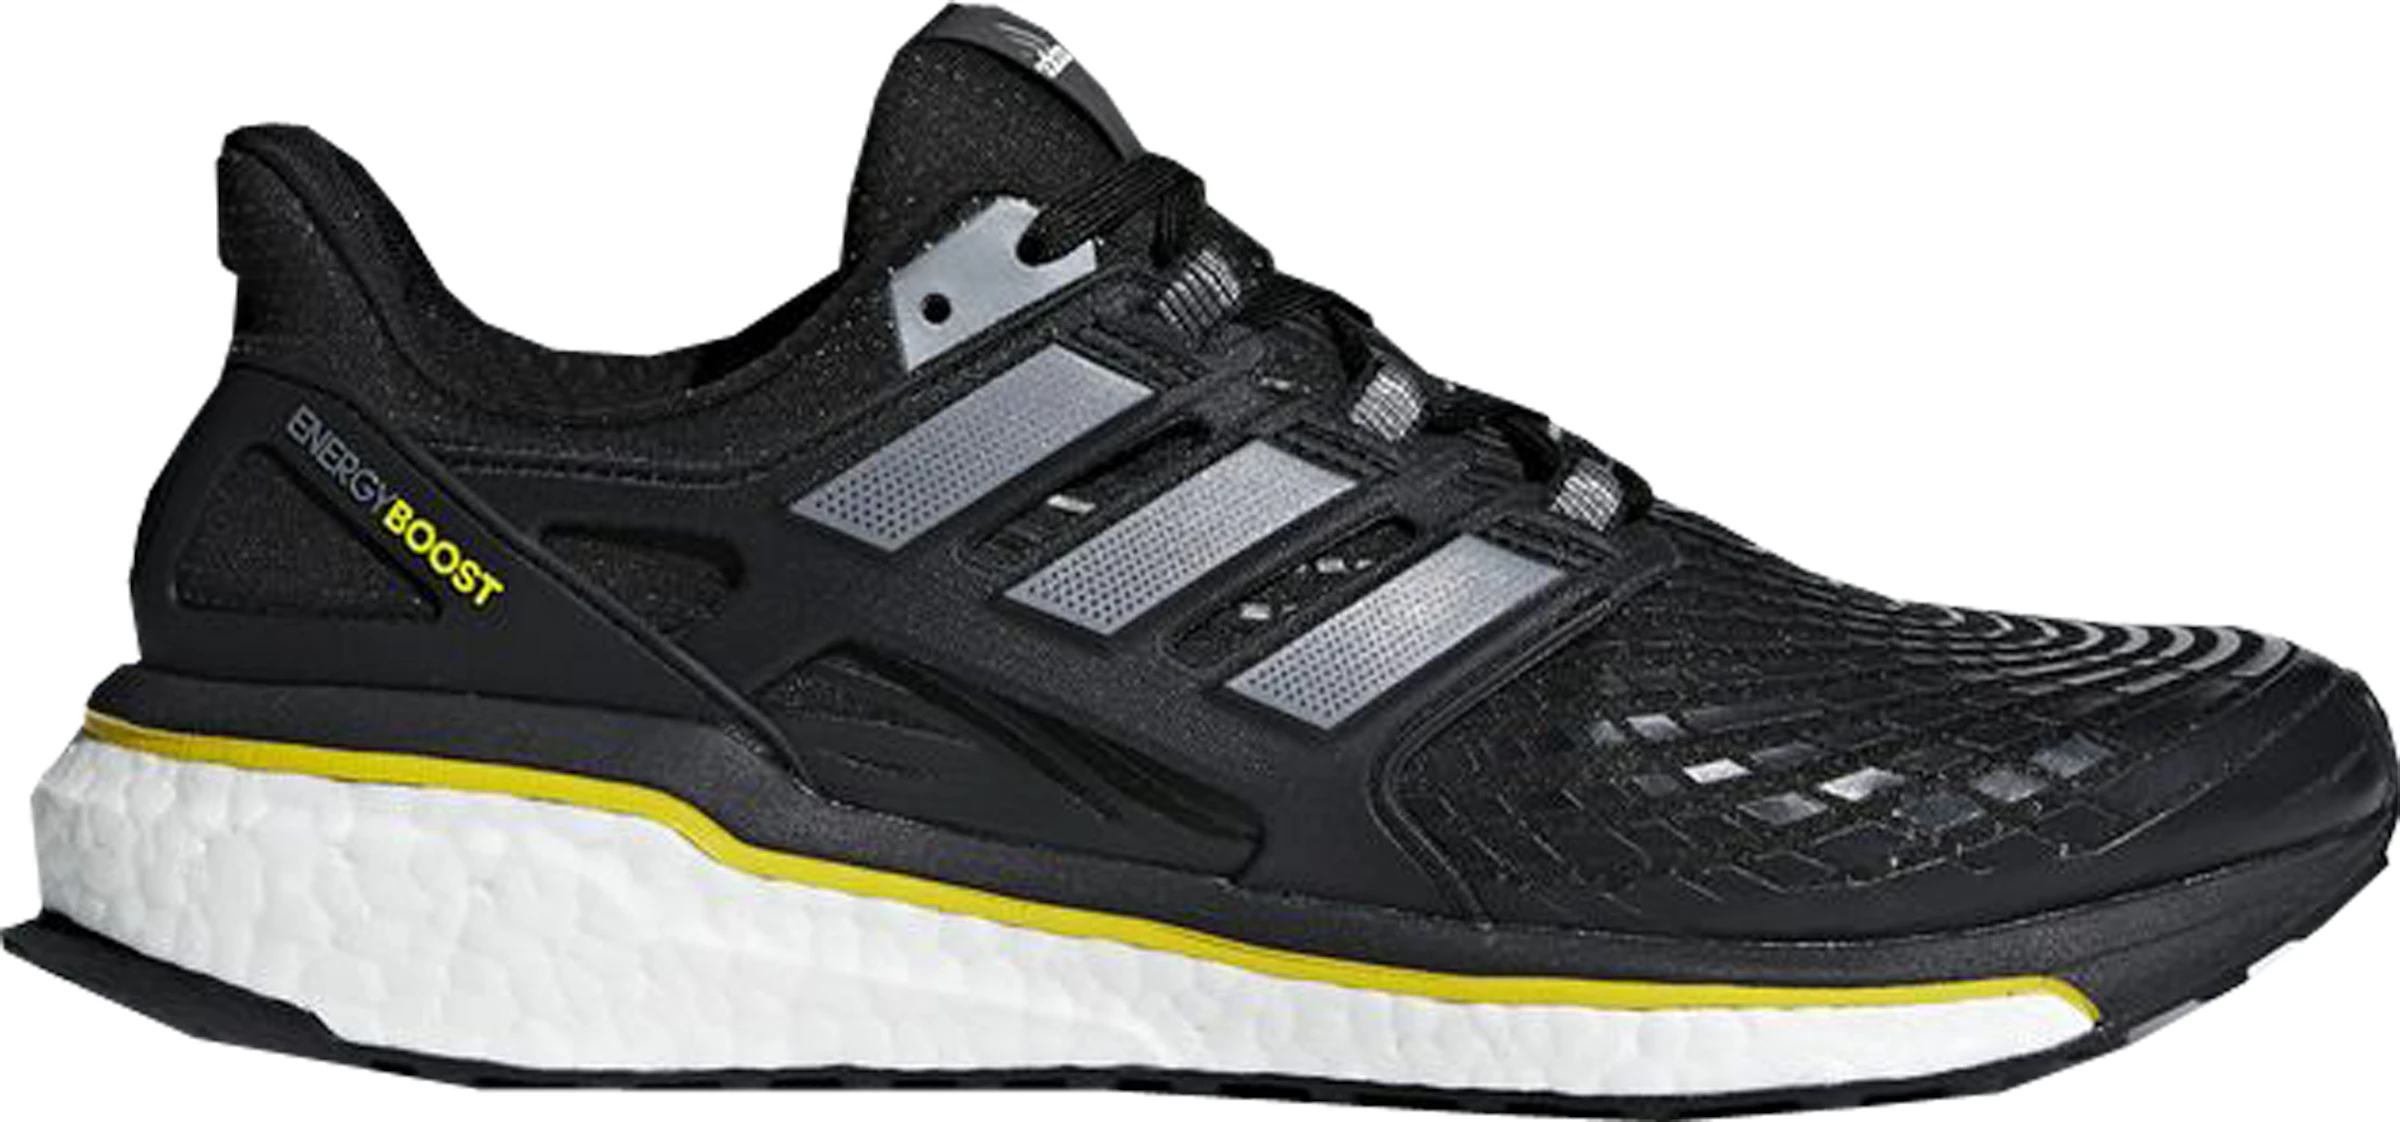 adidas Energy Boost 5th Anniversary Black Yellow - CQ1762 -